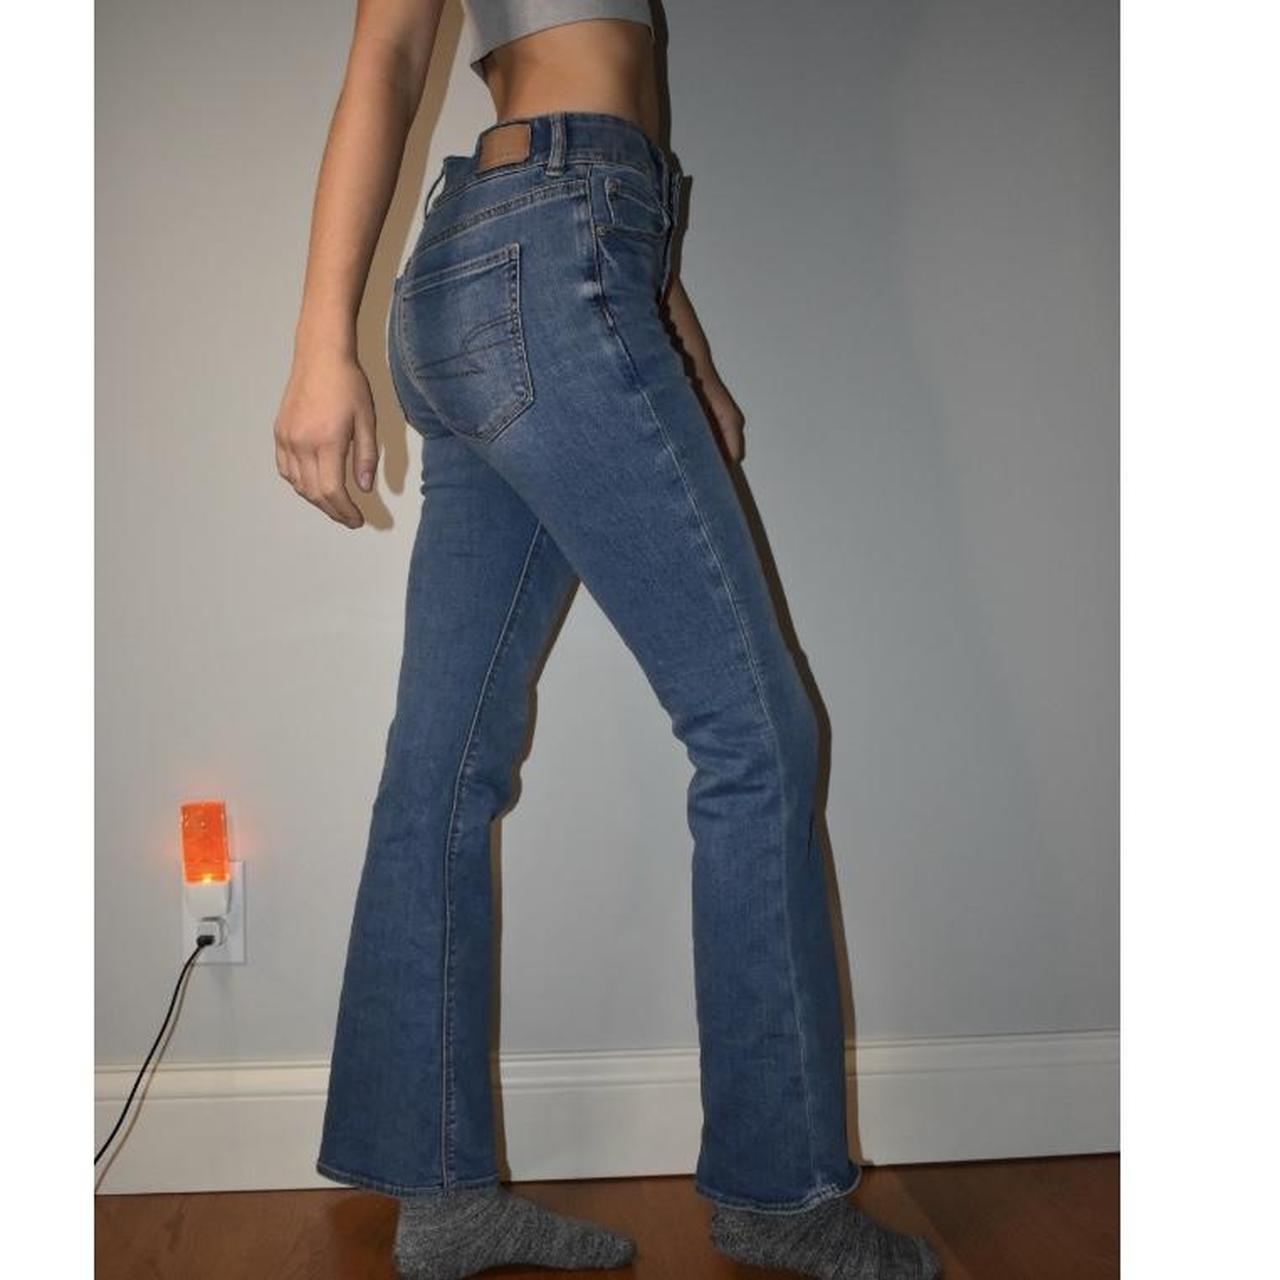 Vintage American Eagle flare jeans size 6 great... - Depop